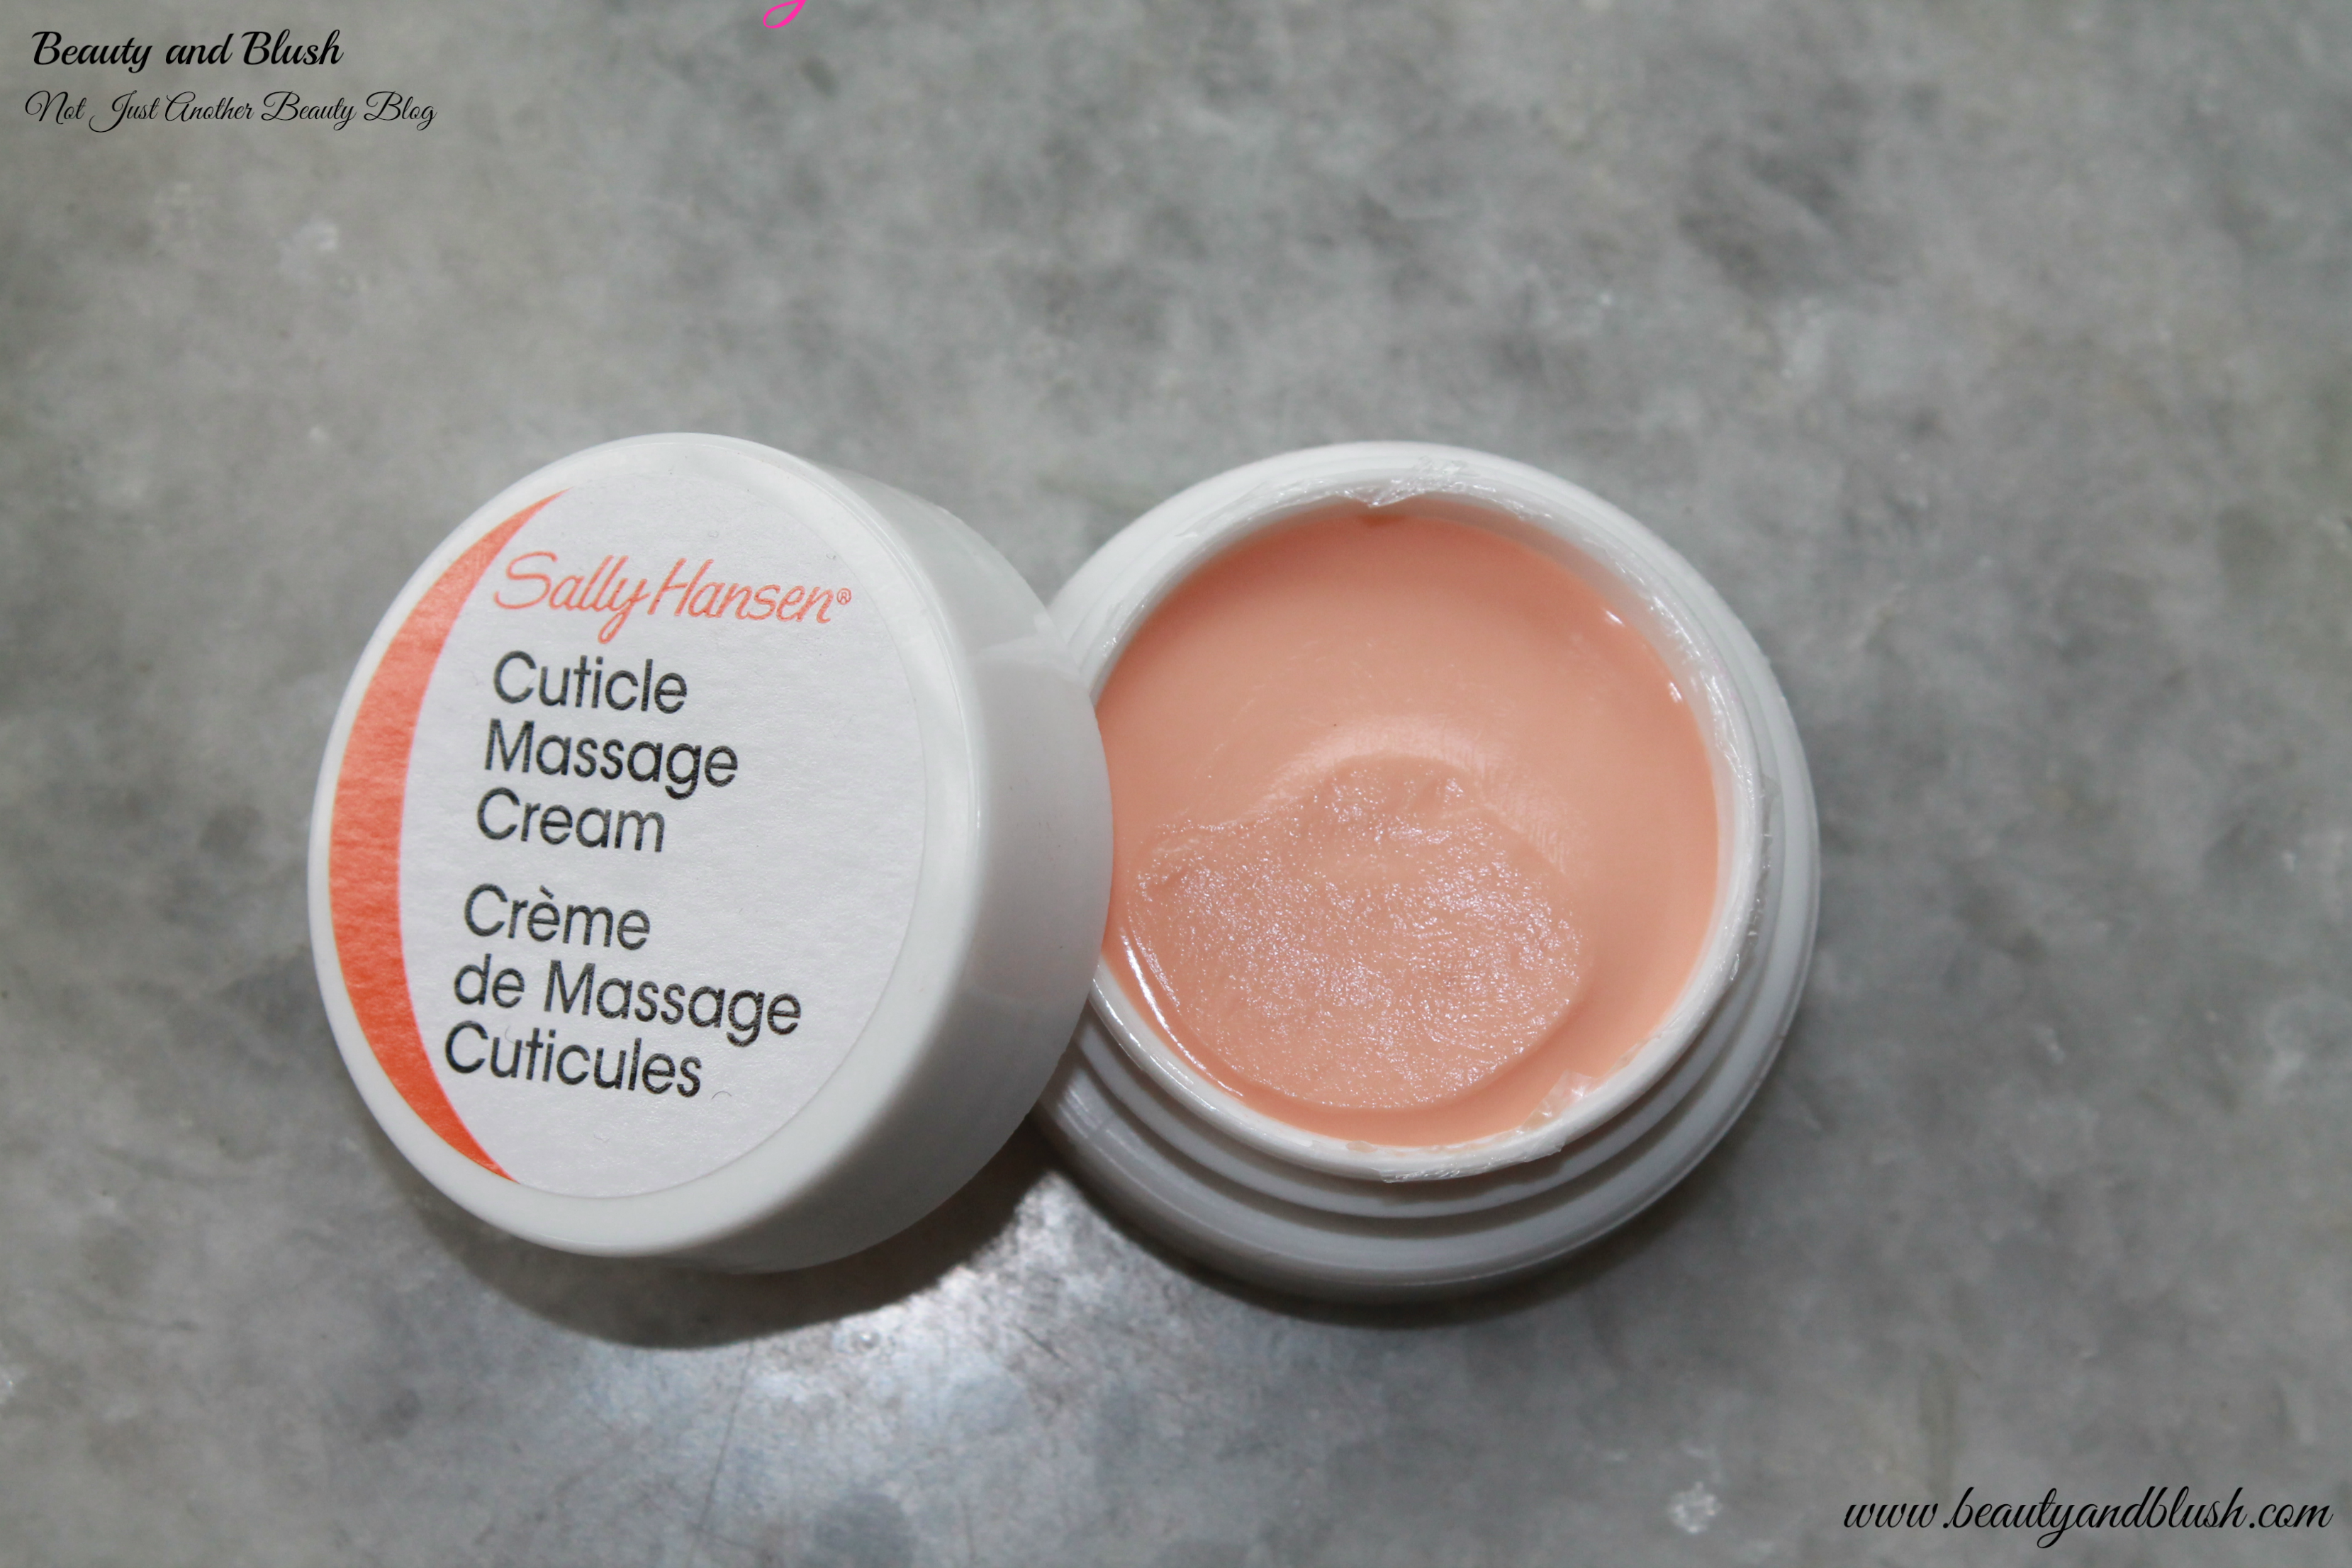 Sally Hansen Cuticle Massage Cream Review